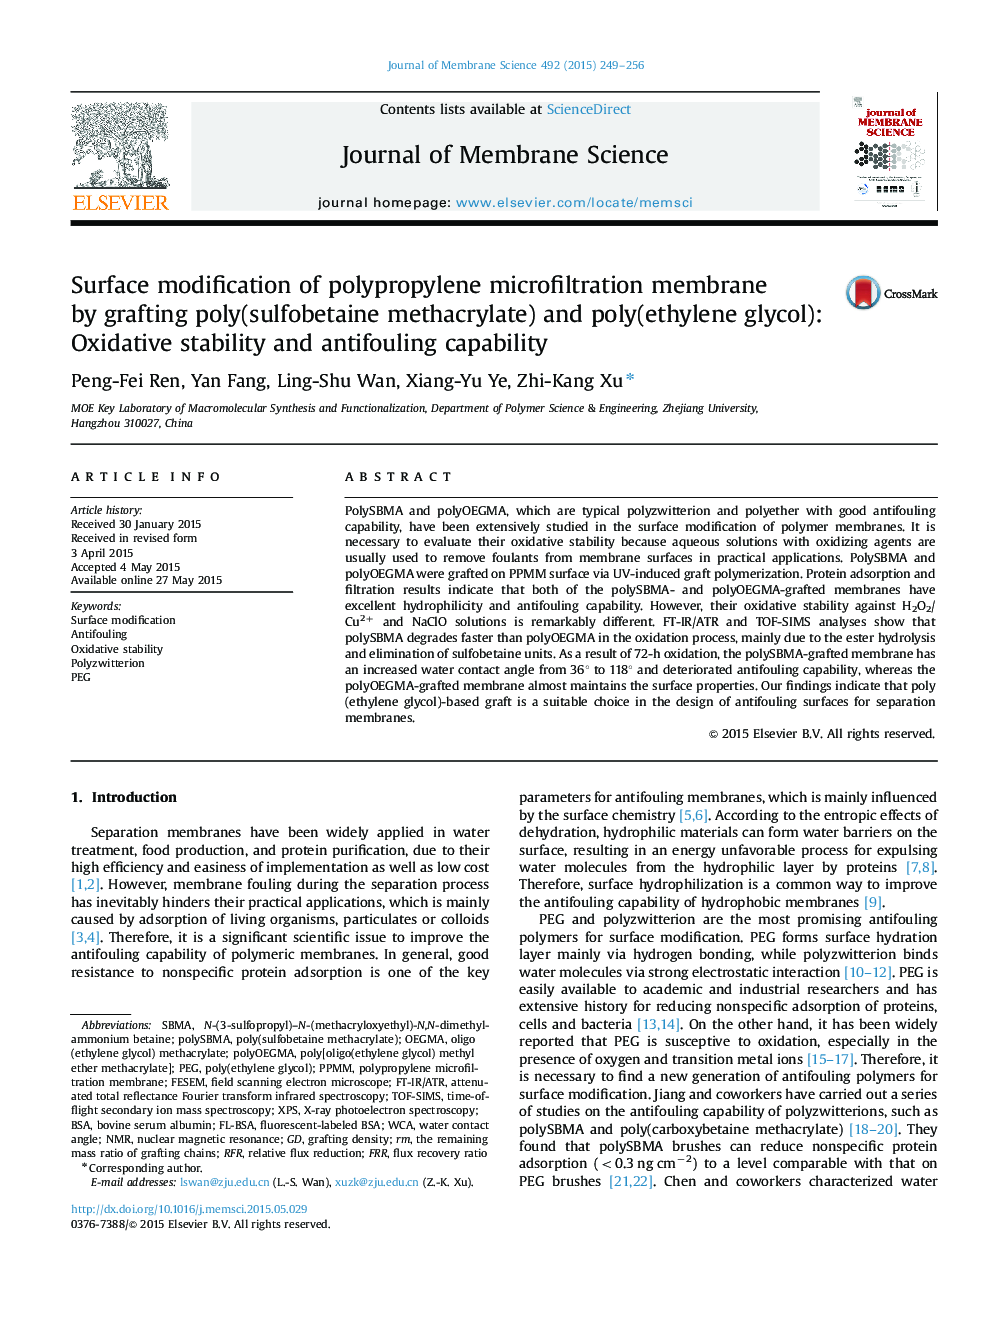 اصلاح سطحی غشاء میکروفیلتراسیون پلی پروپیلن با پیوند پلی (سولفوبتایان متاکریلات) و پلی (اتیلن گلیکول): پایداری اکسیداتیو و قابلیت انتیفولینگ 